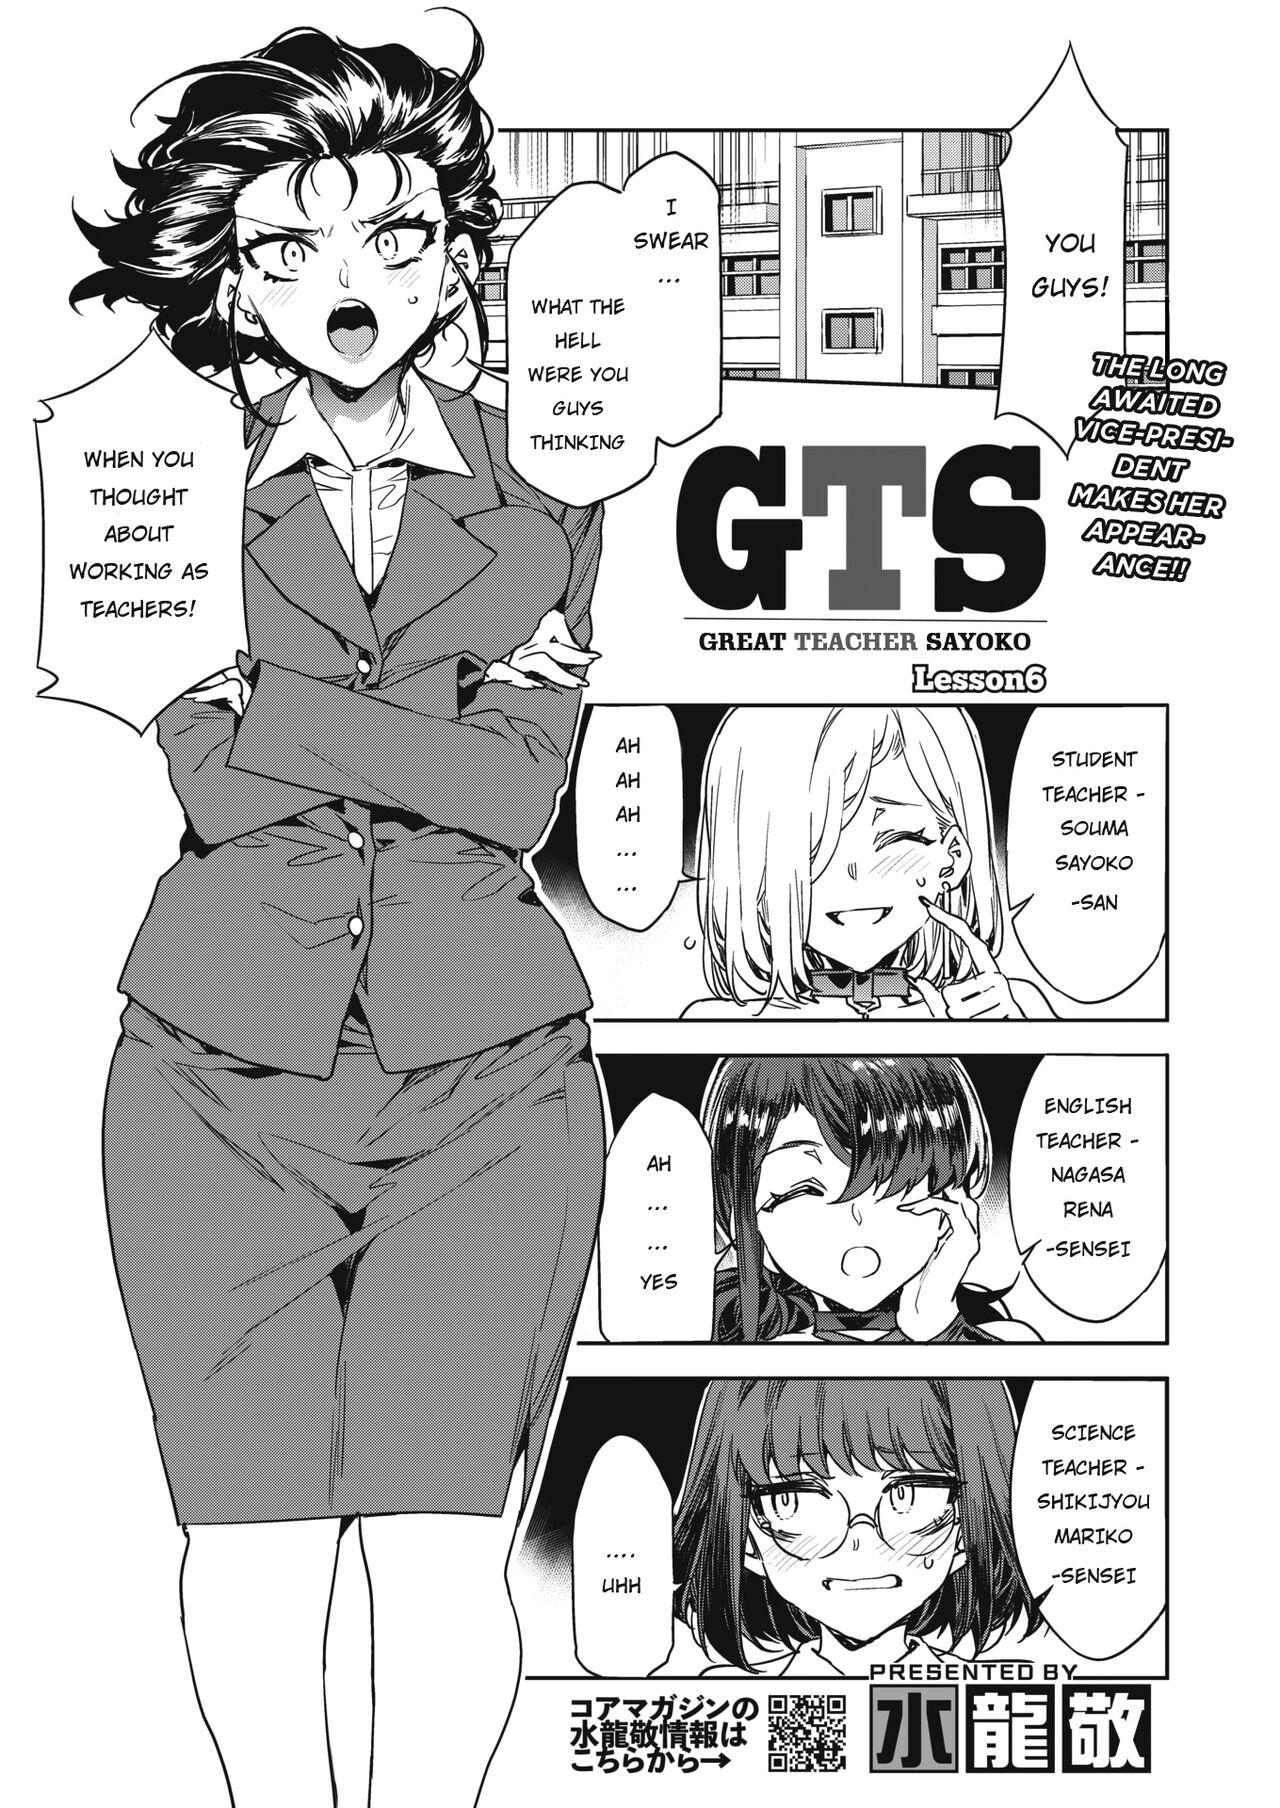 GTS Great Teacher Sayoko Lesson 6 0